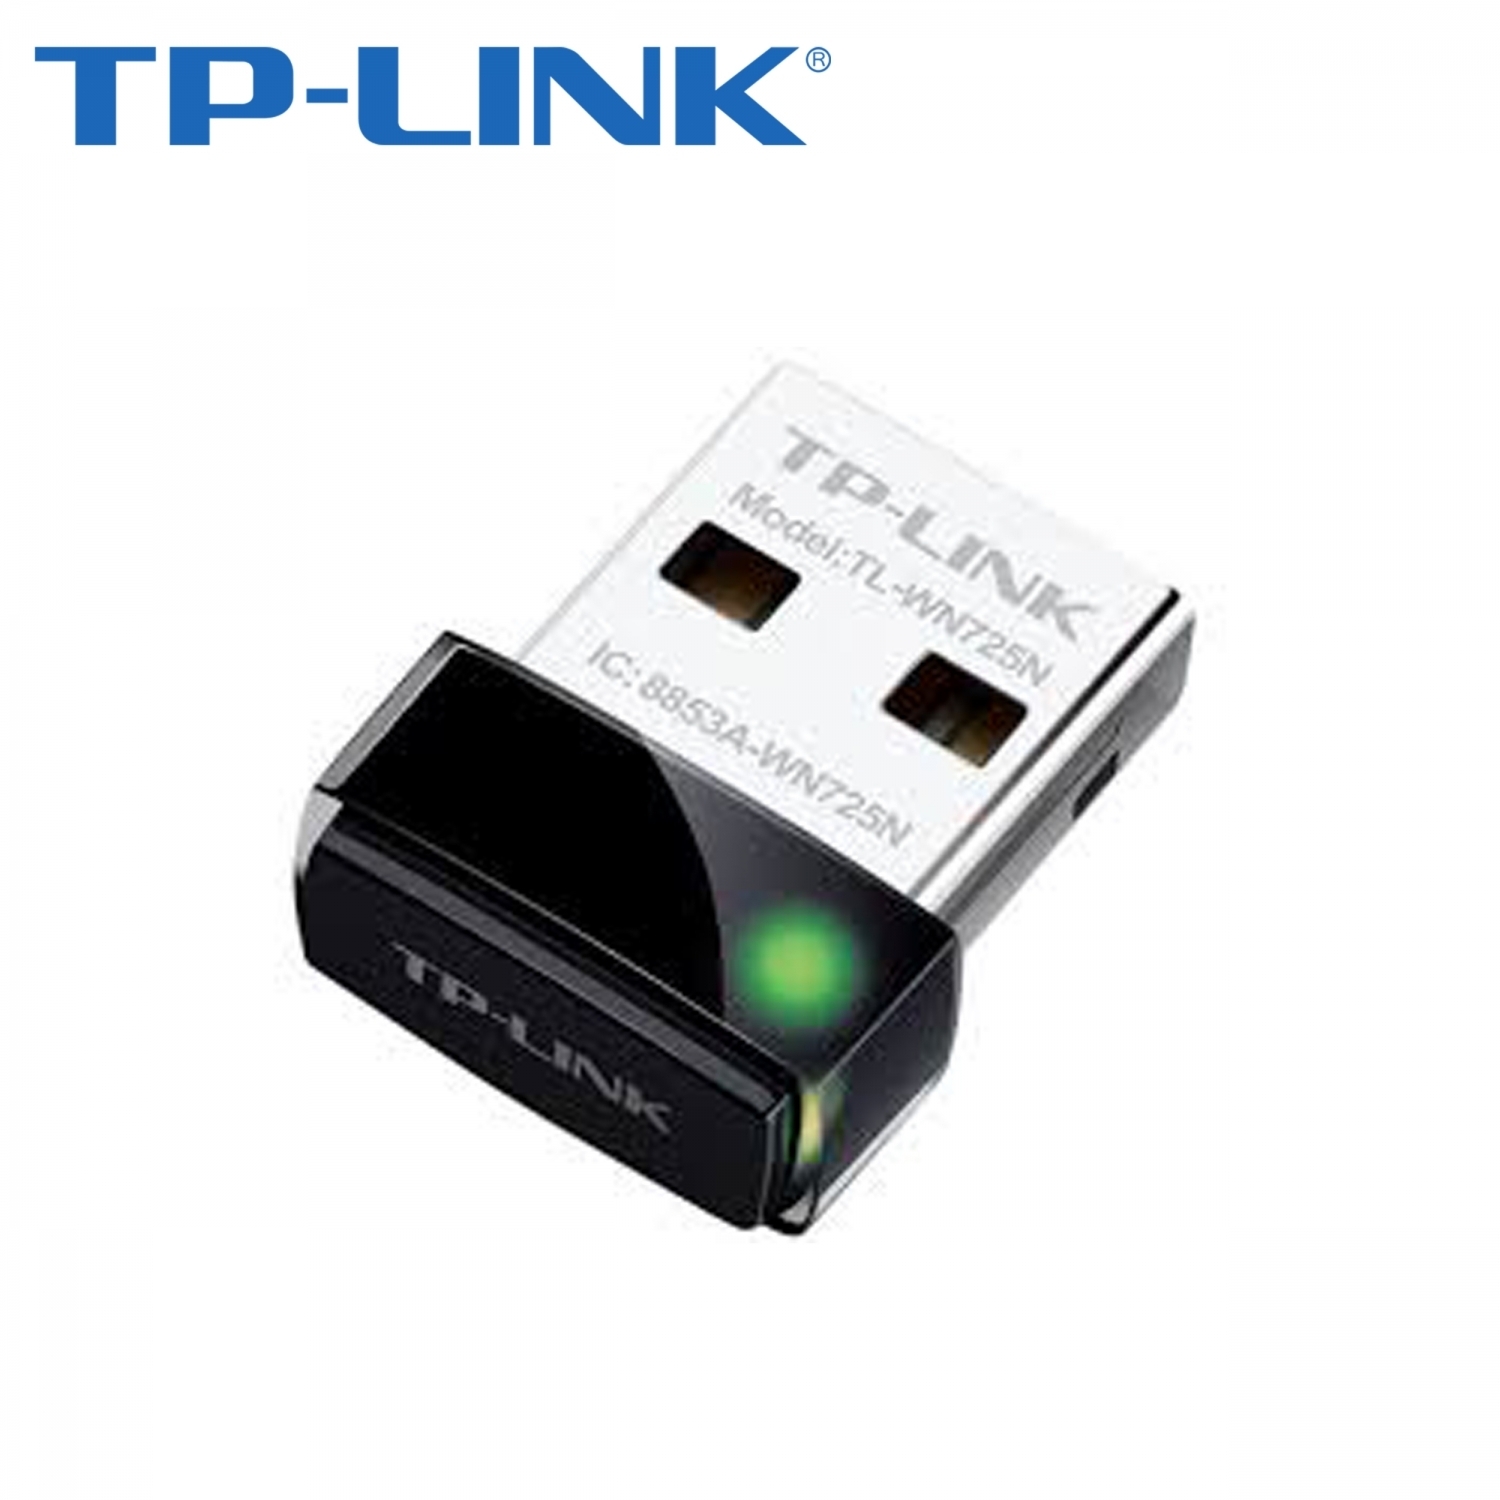 Network Card TP-Link TL-WN725N (USB)